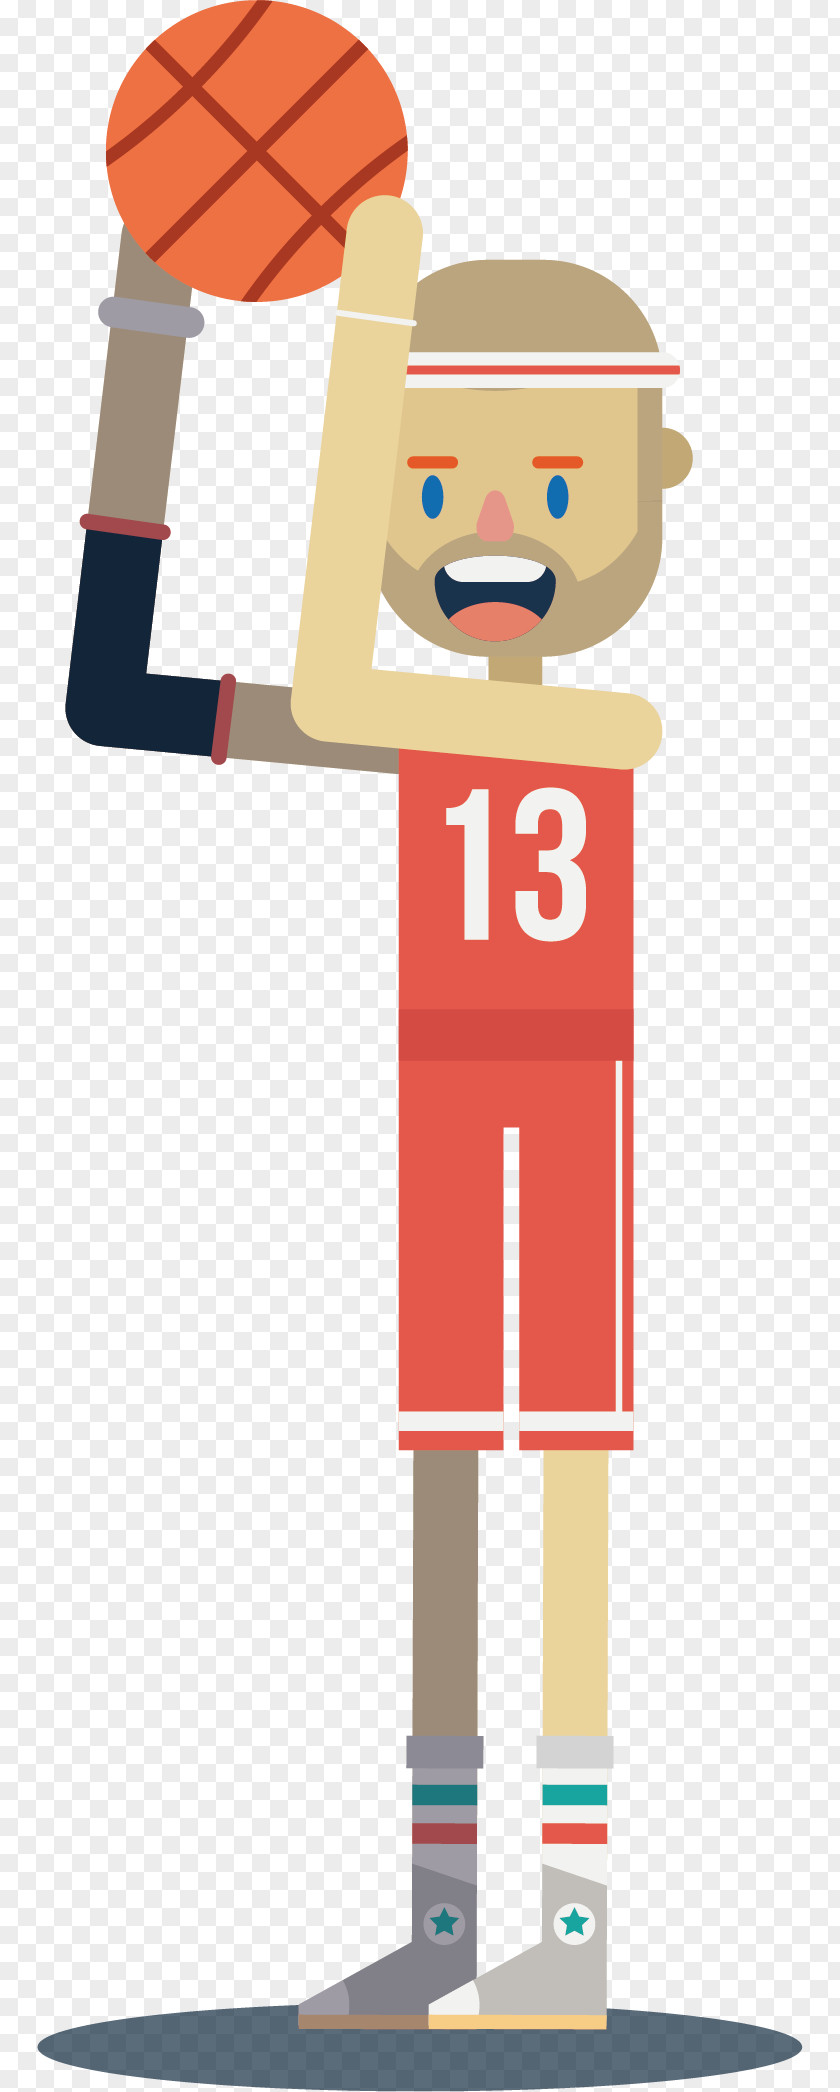 Basketball Vector Player Adobe Illustrator PNG